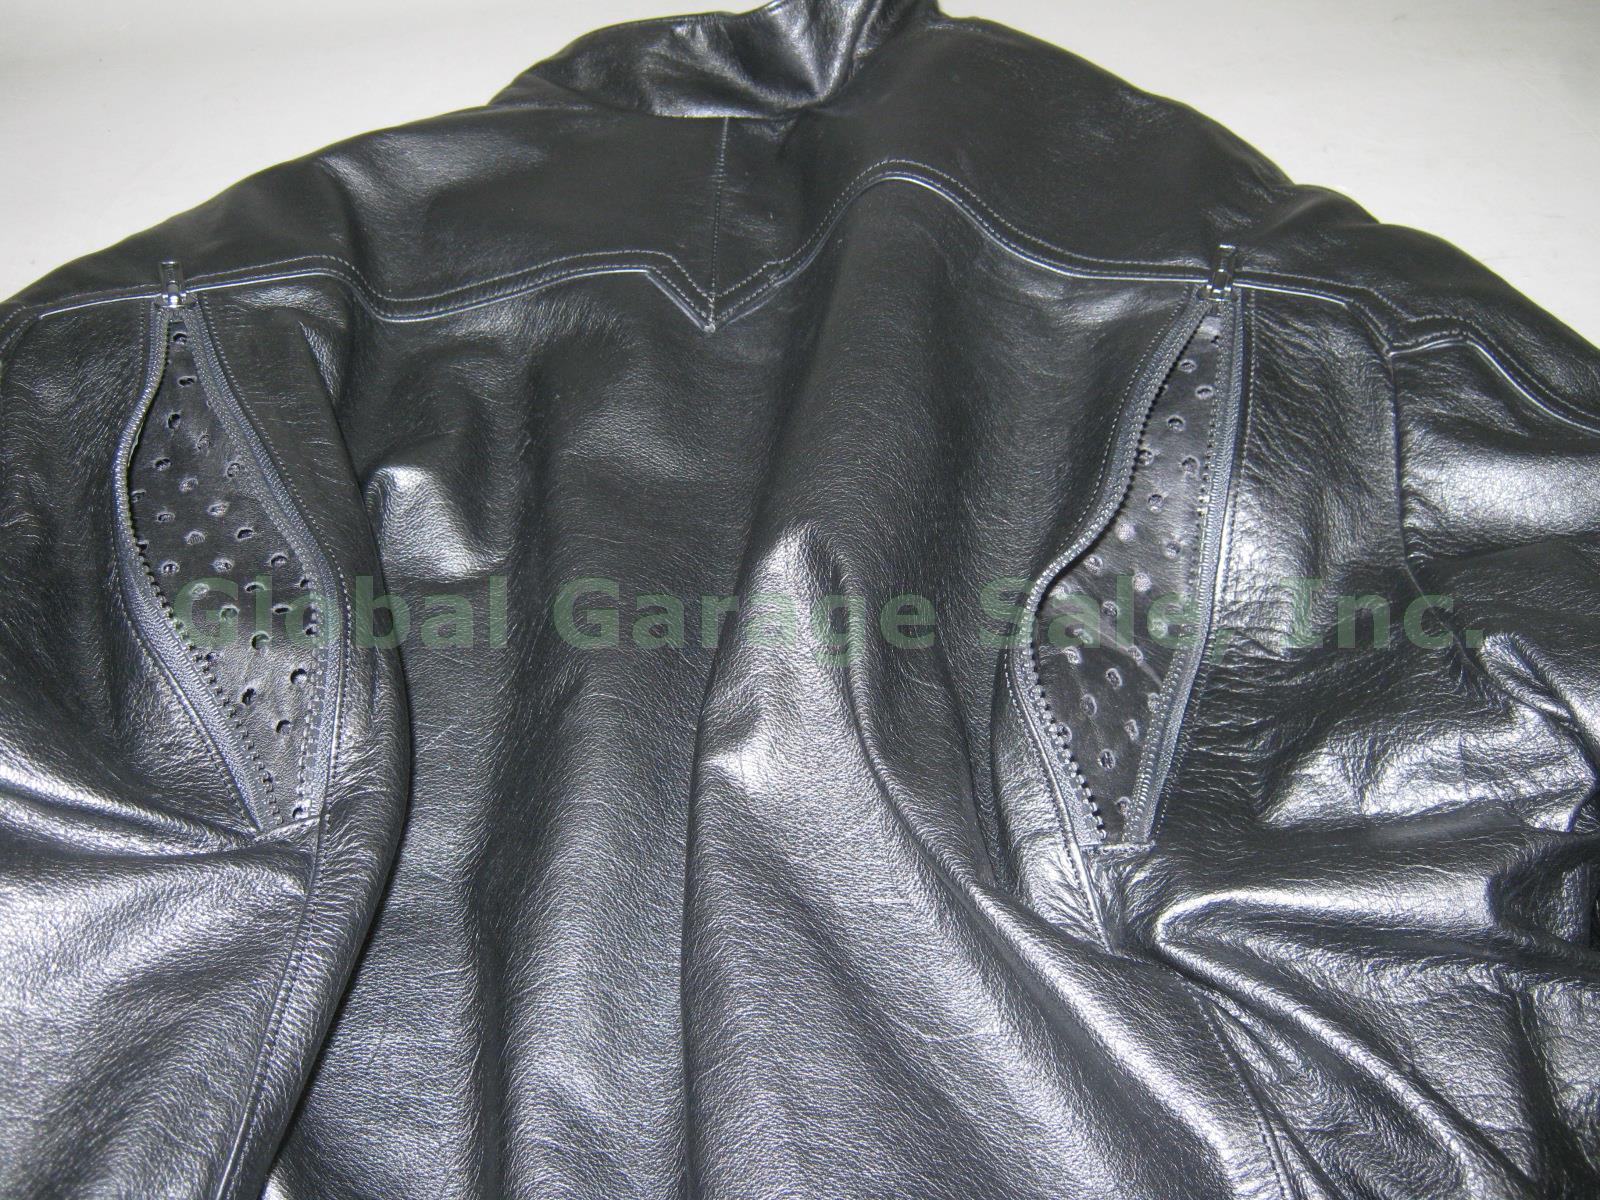 Hein Gericke Black Leather Motorcycle Suit Jacket W/ Liner 44 Boot Cut Pants 36 4